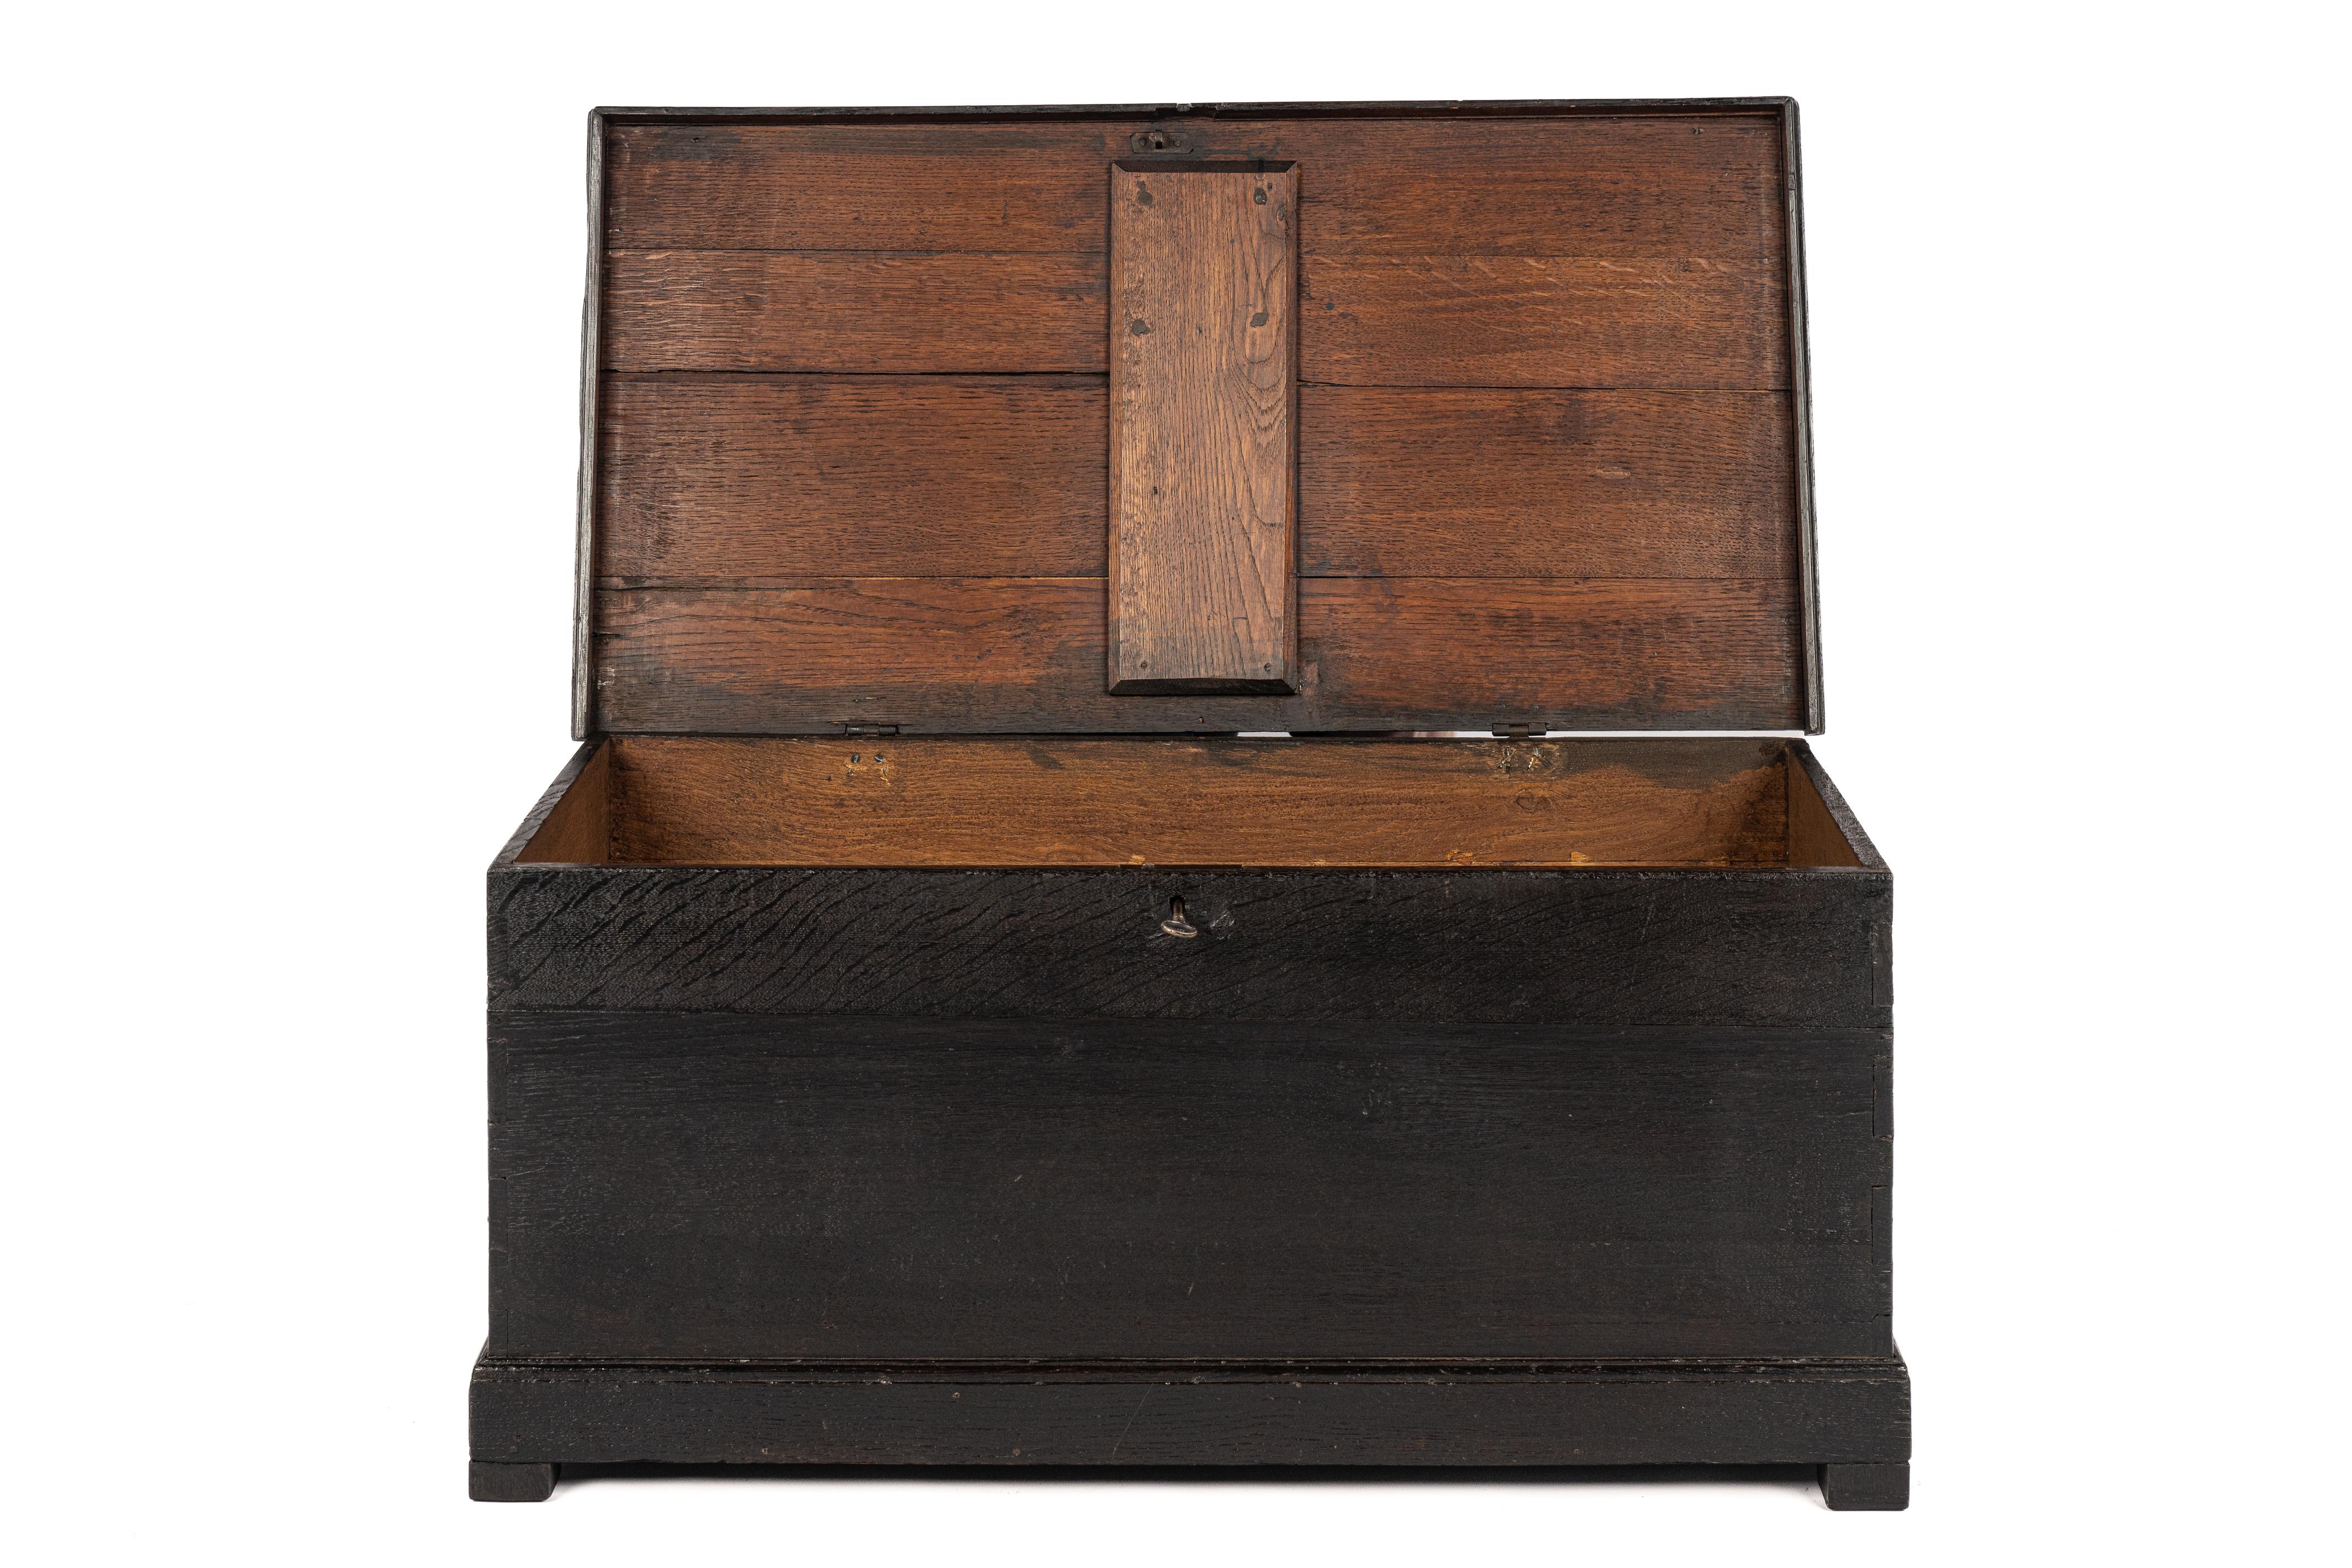 Antique 19th-century West German black oak blanket chest trunk or coffer For Sale 2